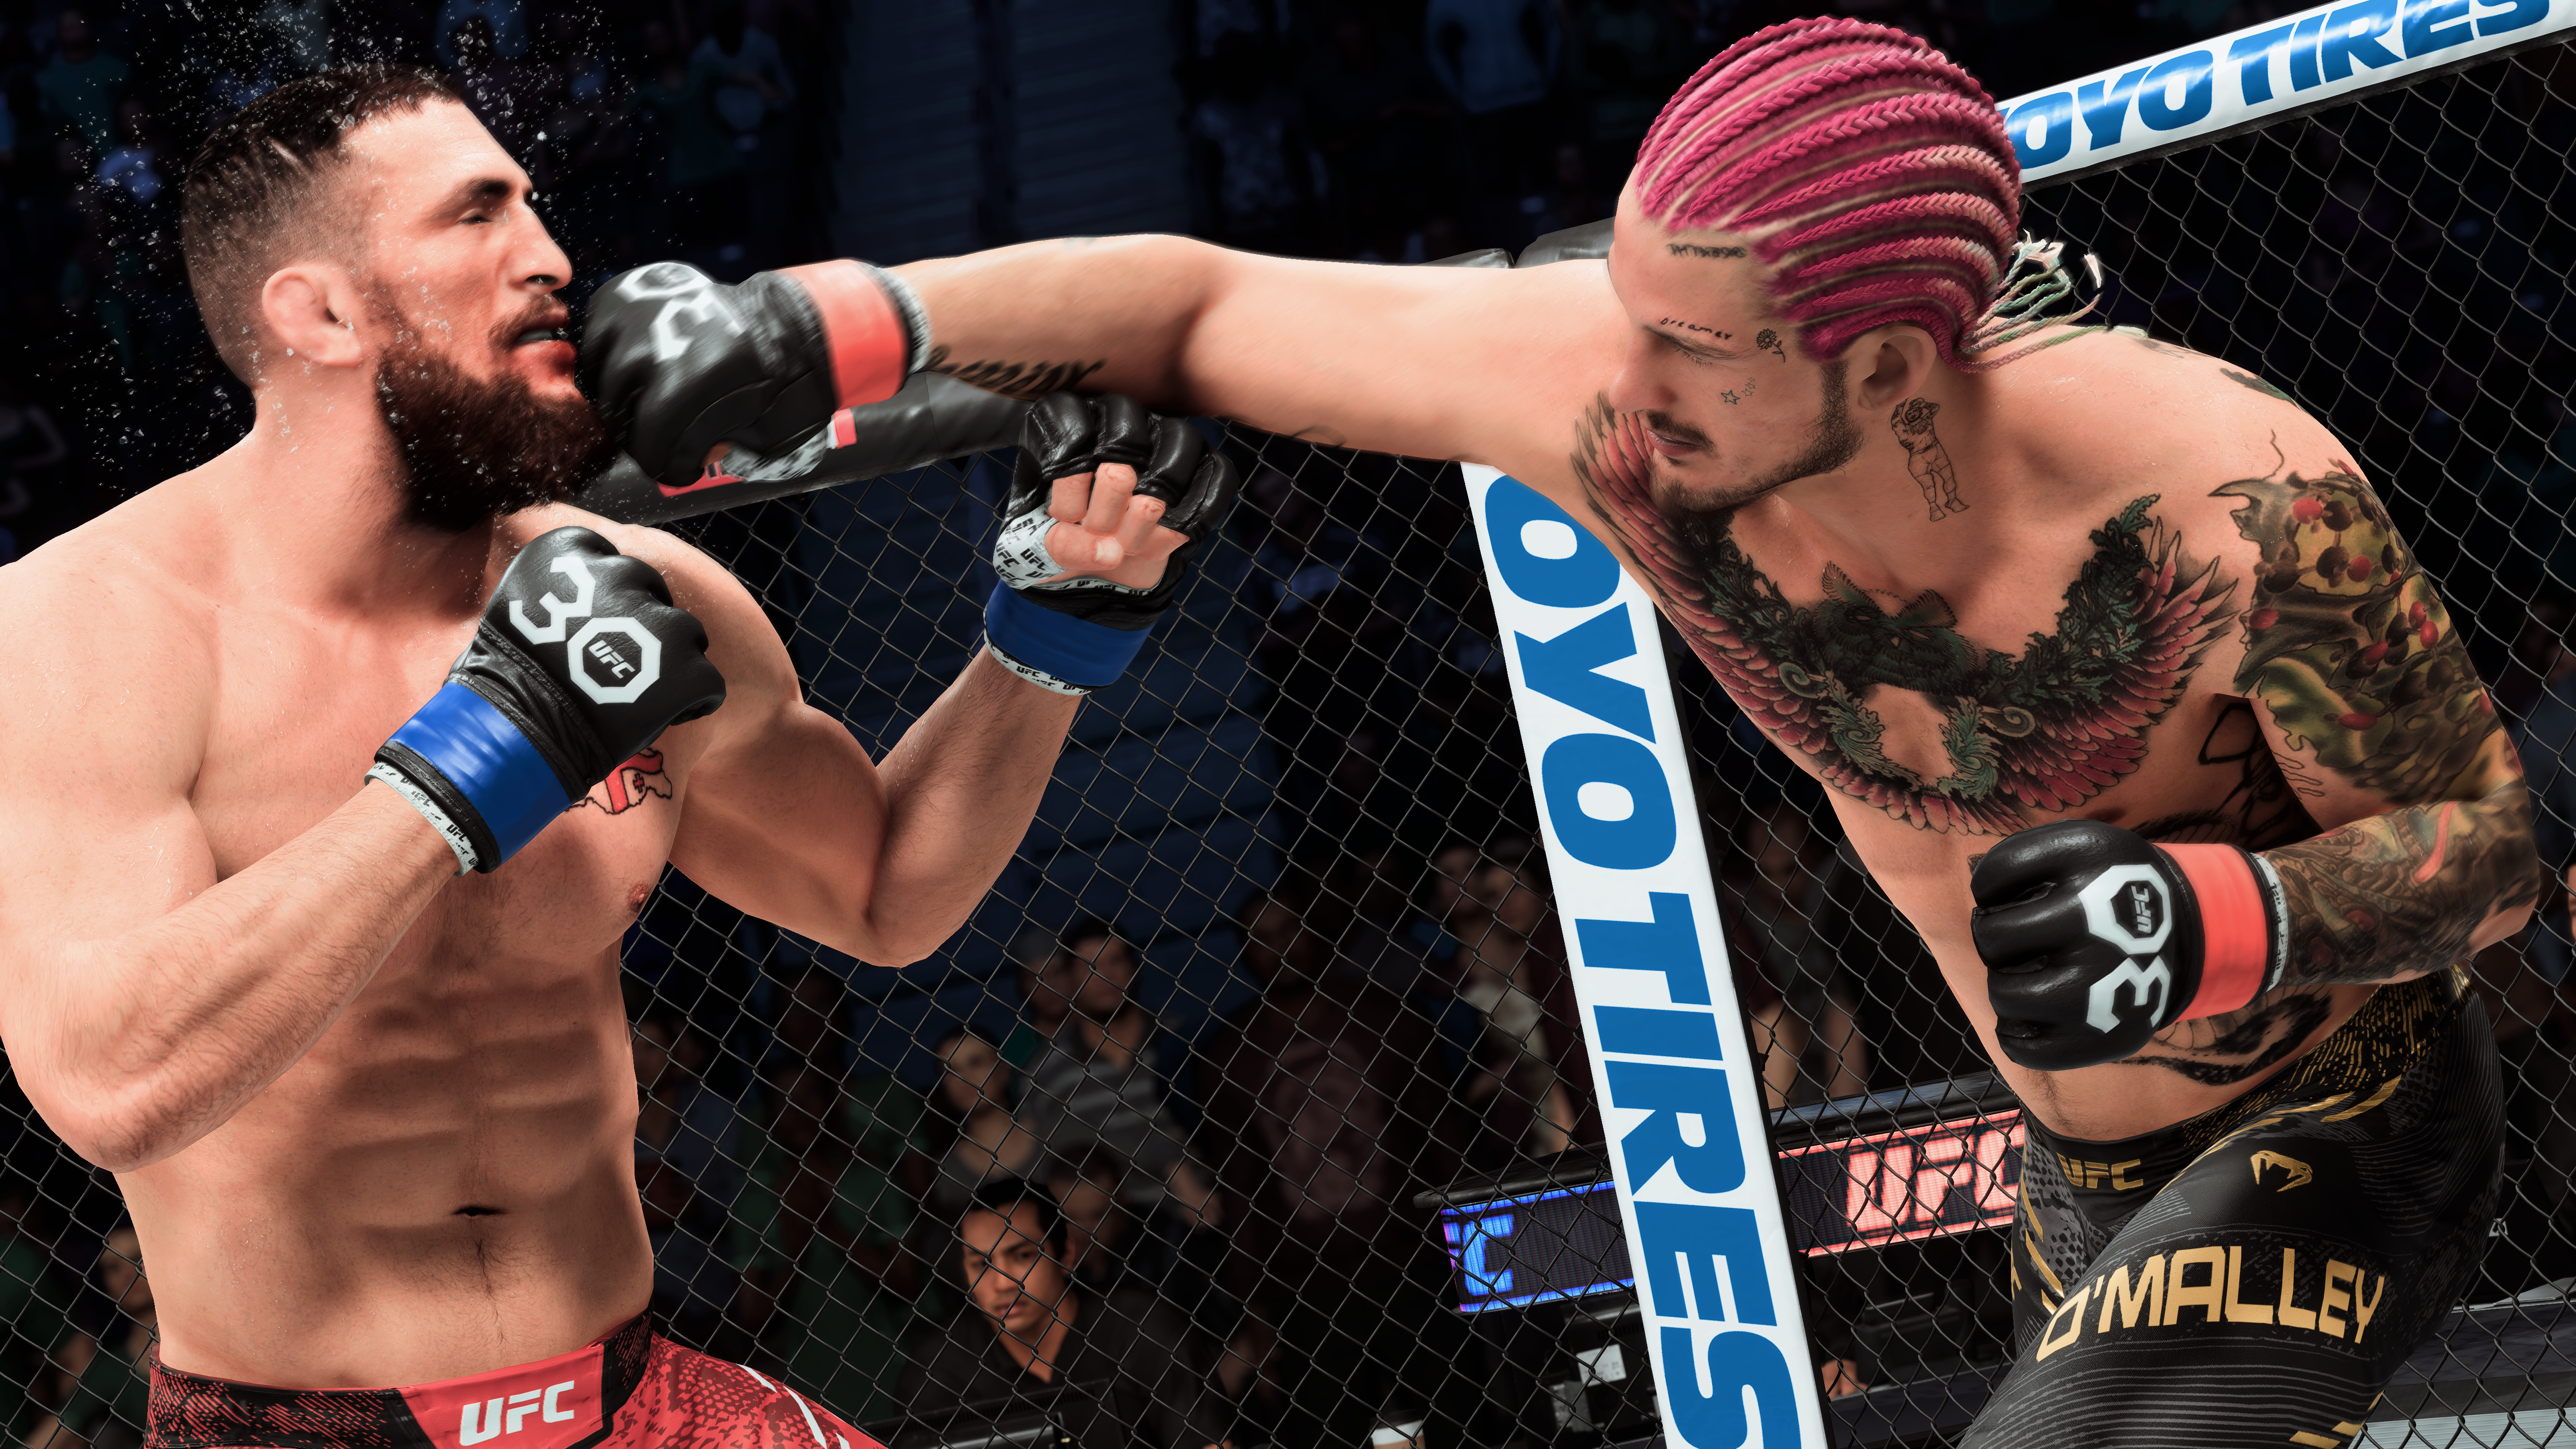 UFC 5 Review: A Near-Knockout